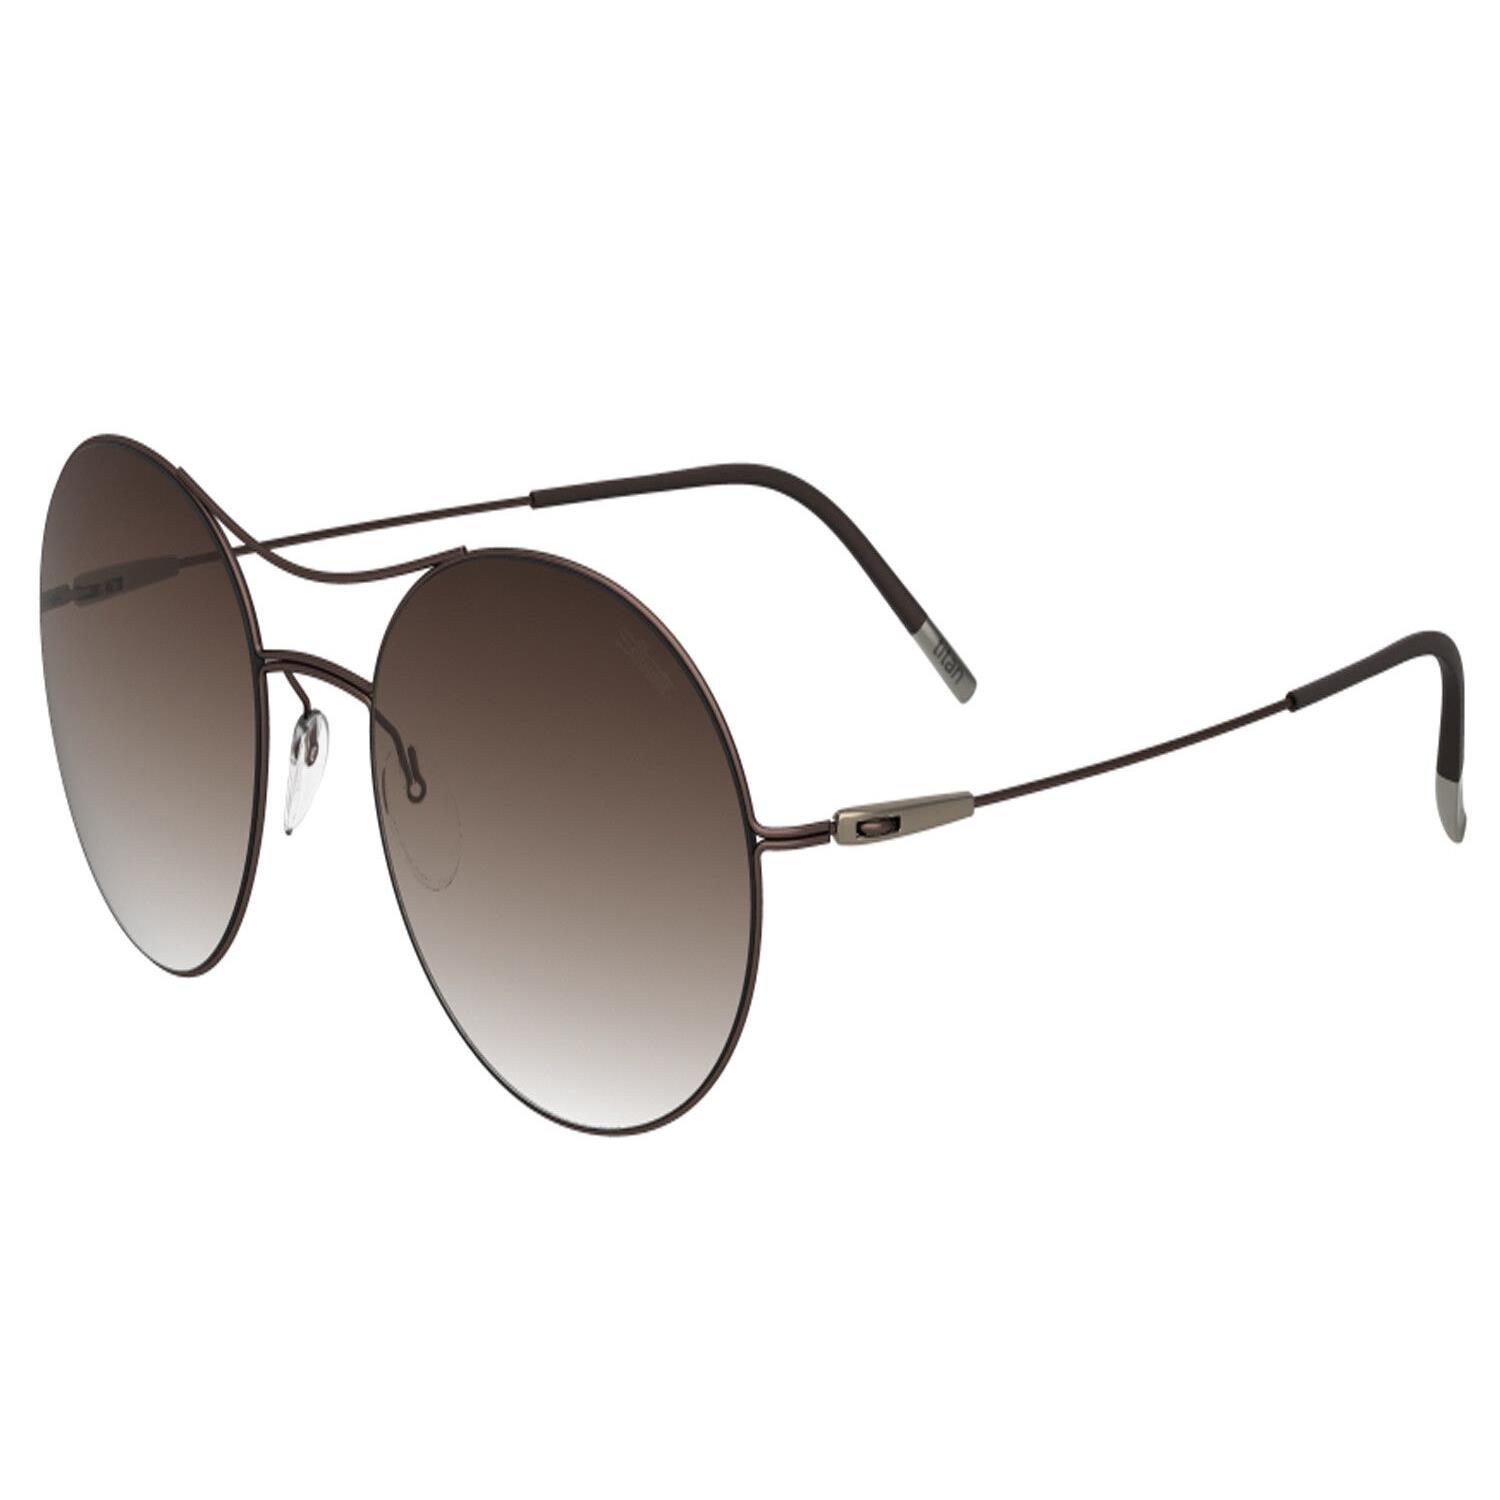 Silhouette Sunglasses Titan Breeze 8694 Caramel Matte 8694-75-6040